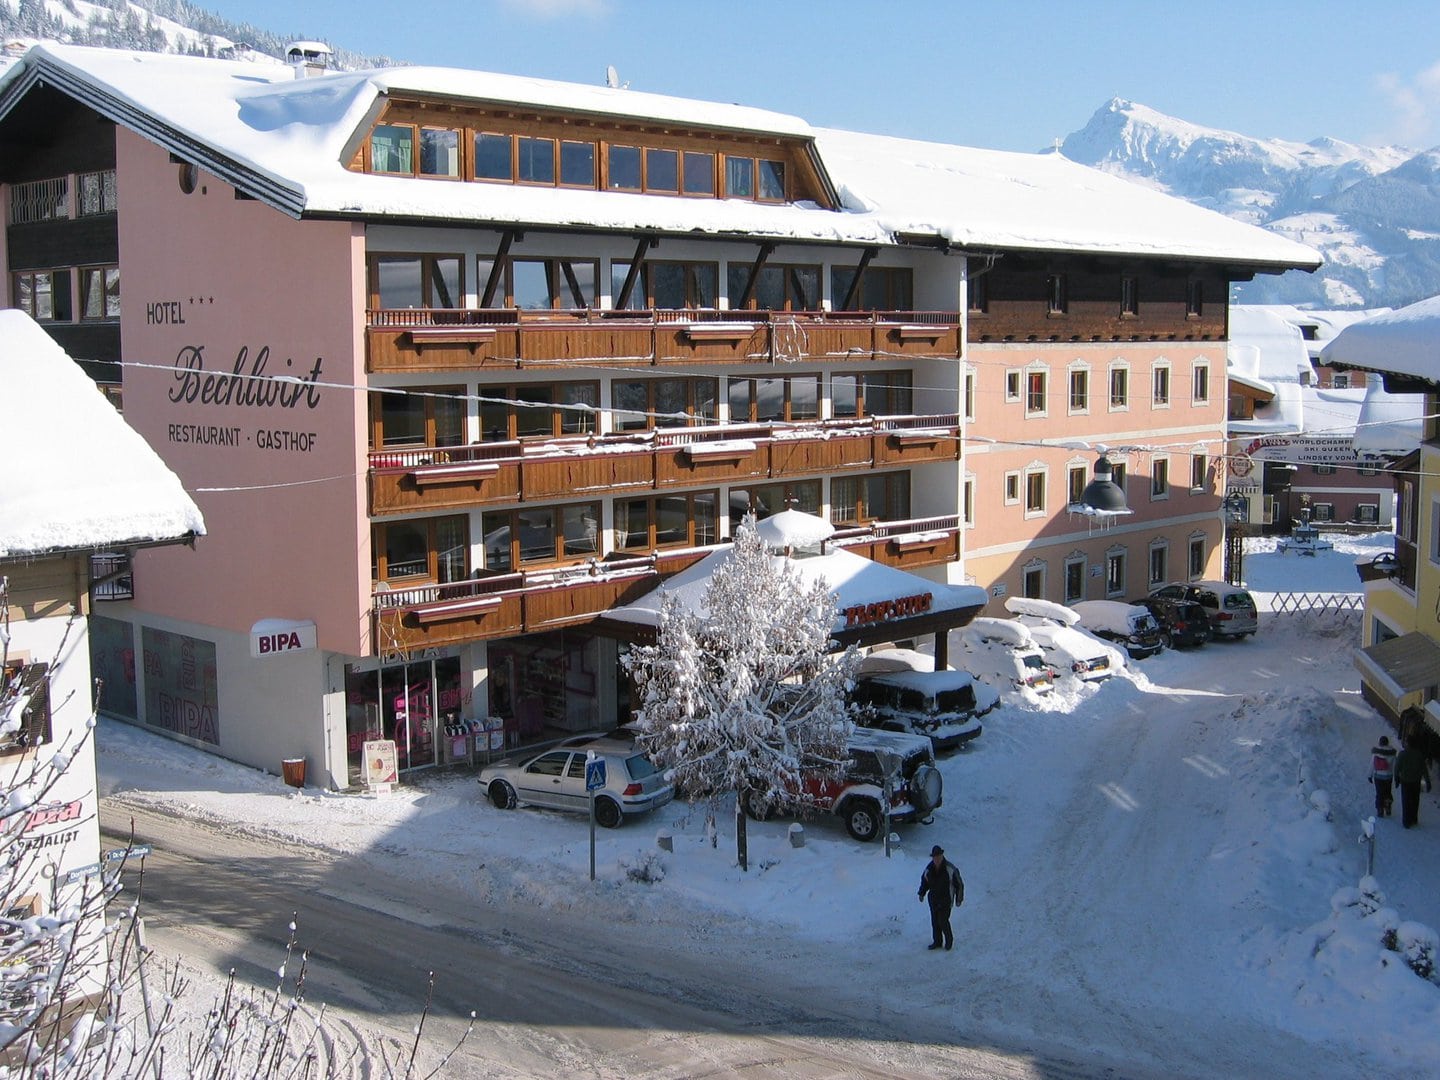 HotelBechelwirt_kitzbuhel_firmature_ski